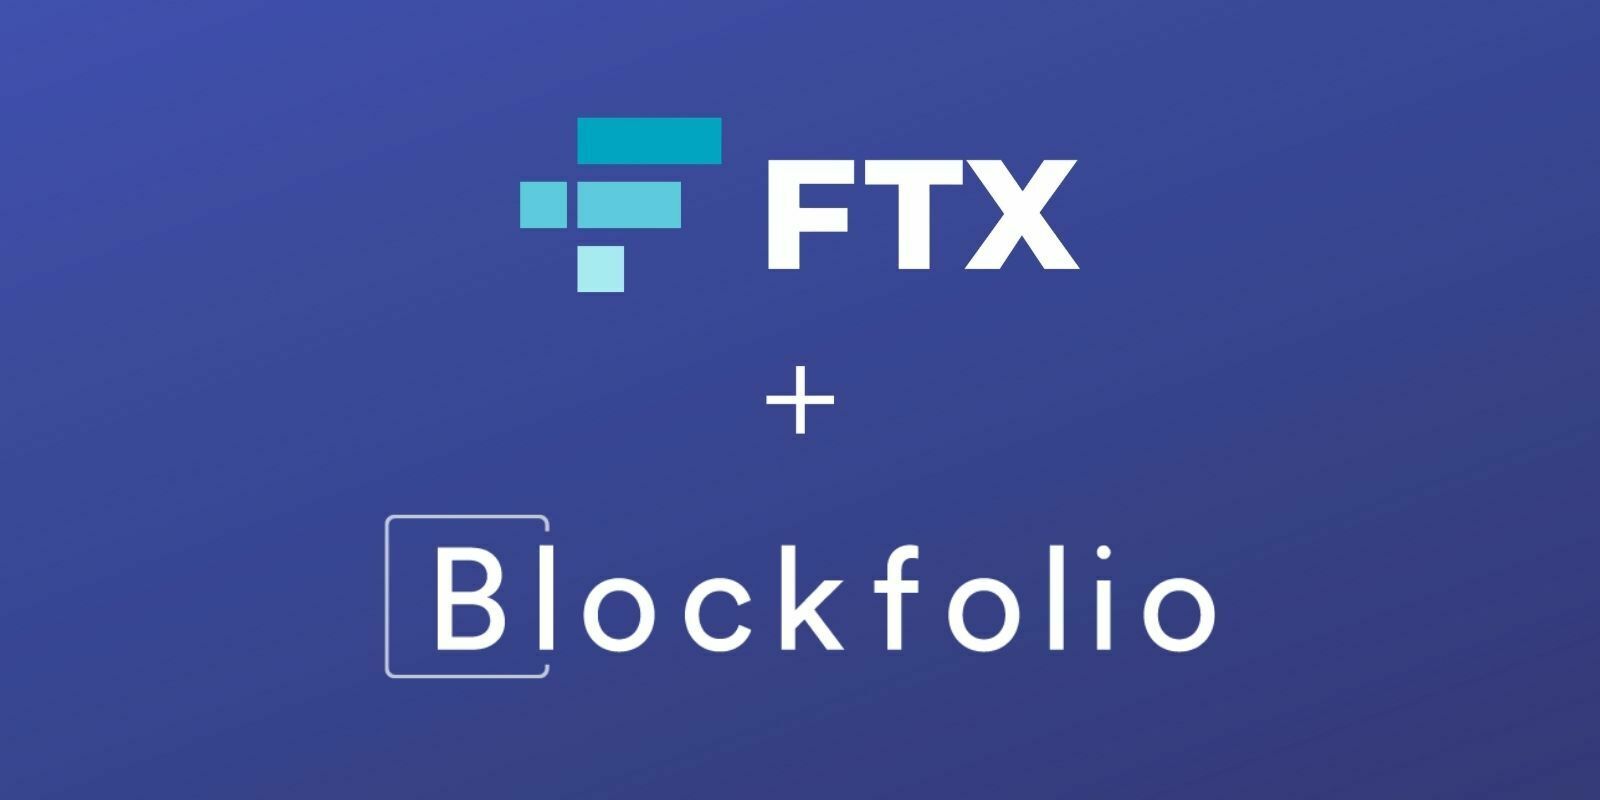 L'exchange FTX acquiert Blockfolio pour 150 millions de dollars